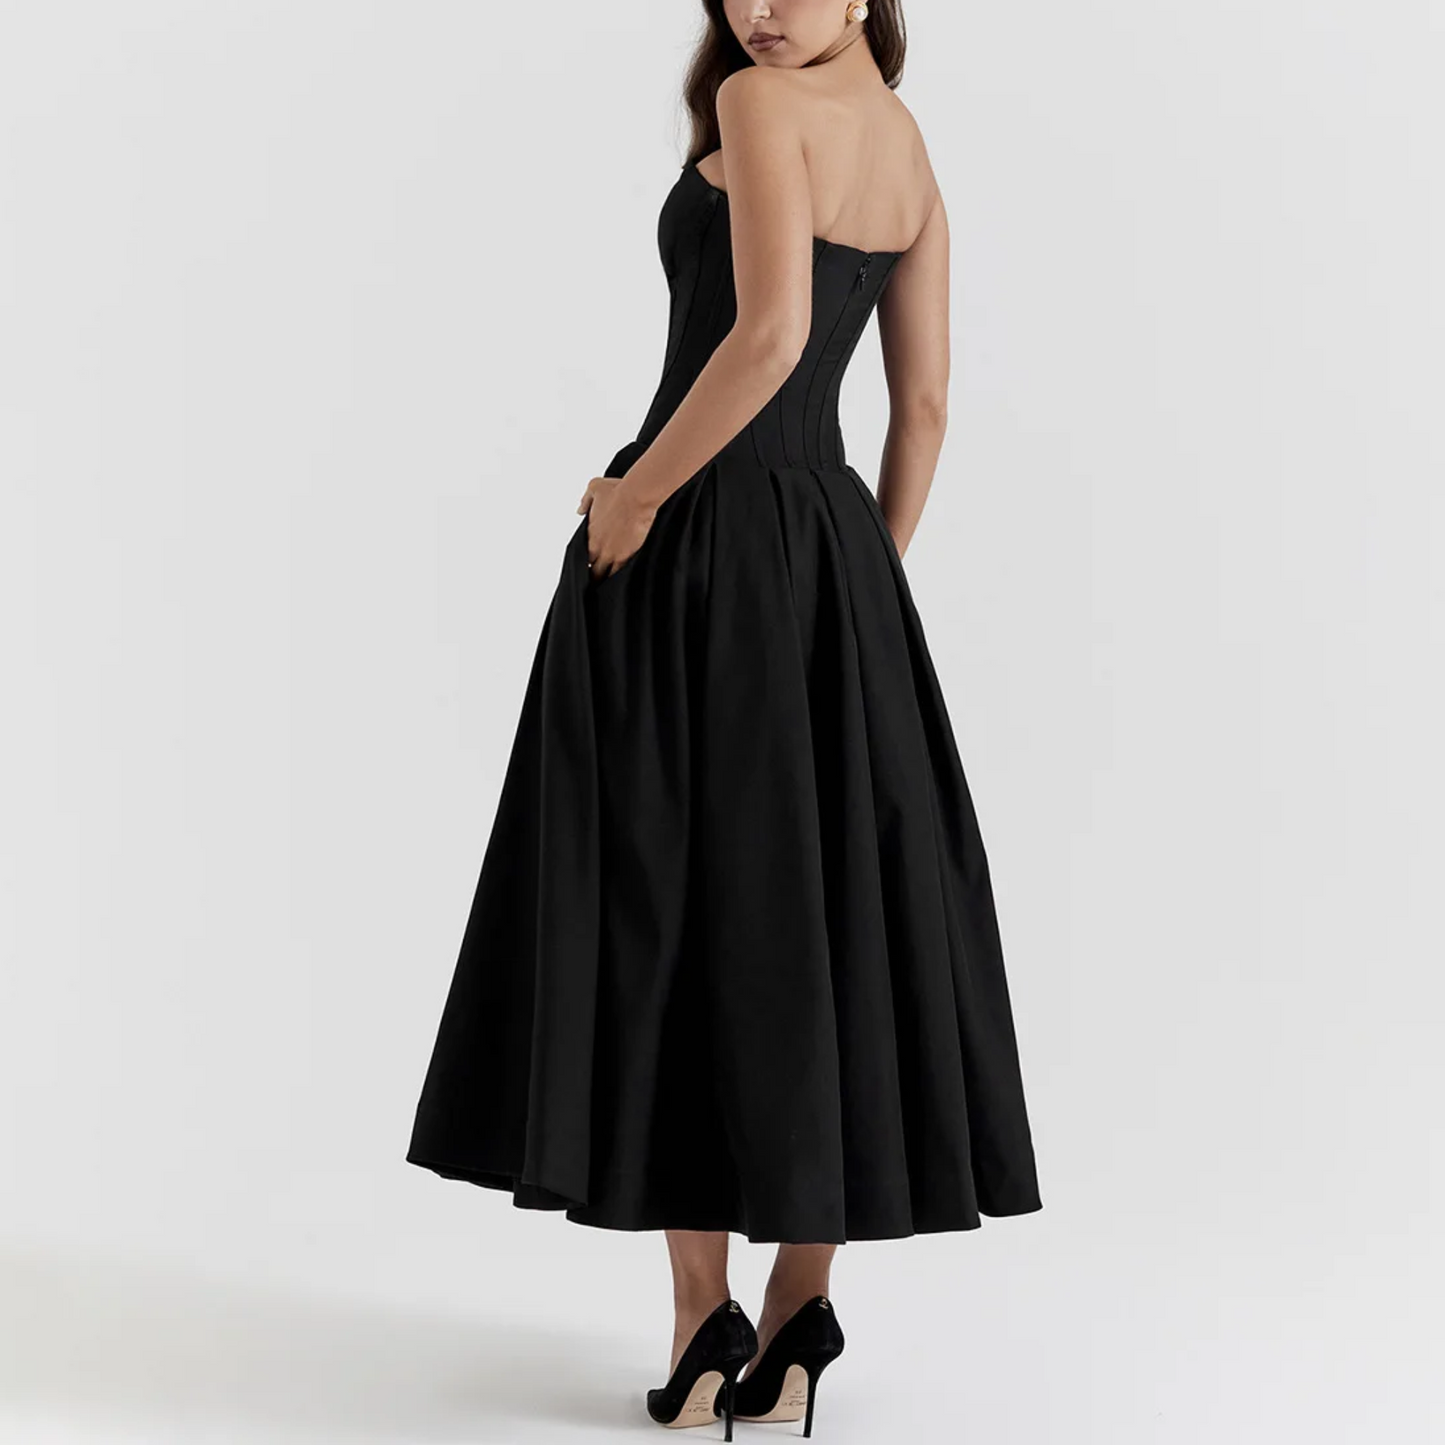 Juana - Long Black Strapless A-Line Corset Dress